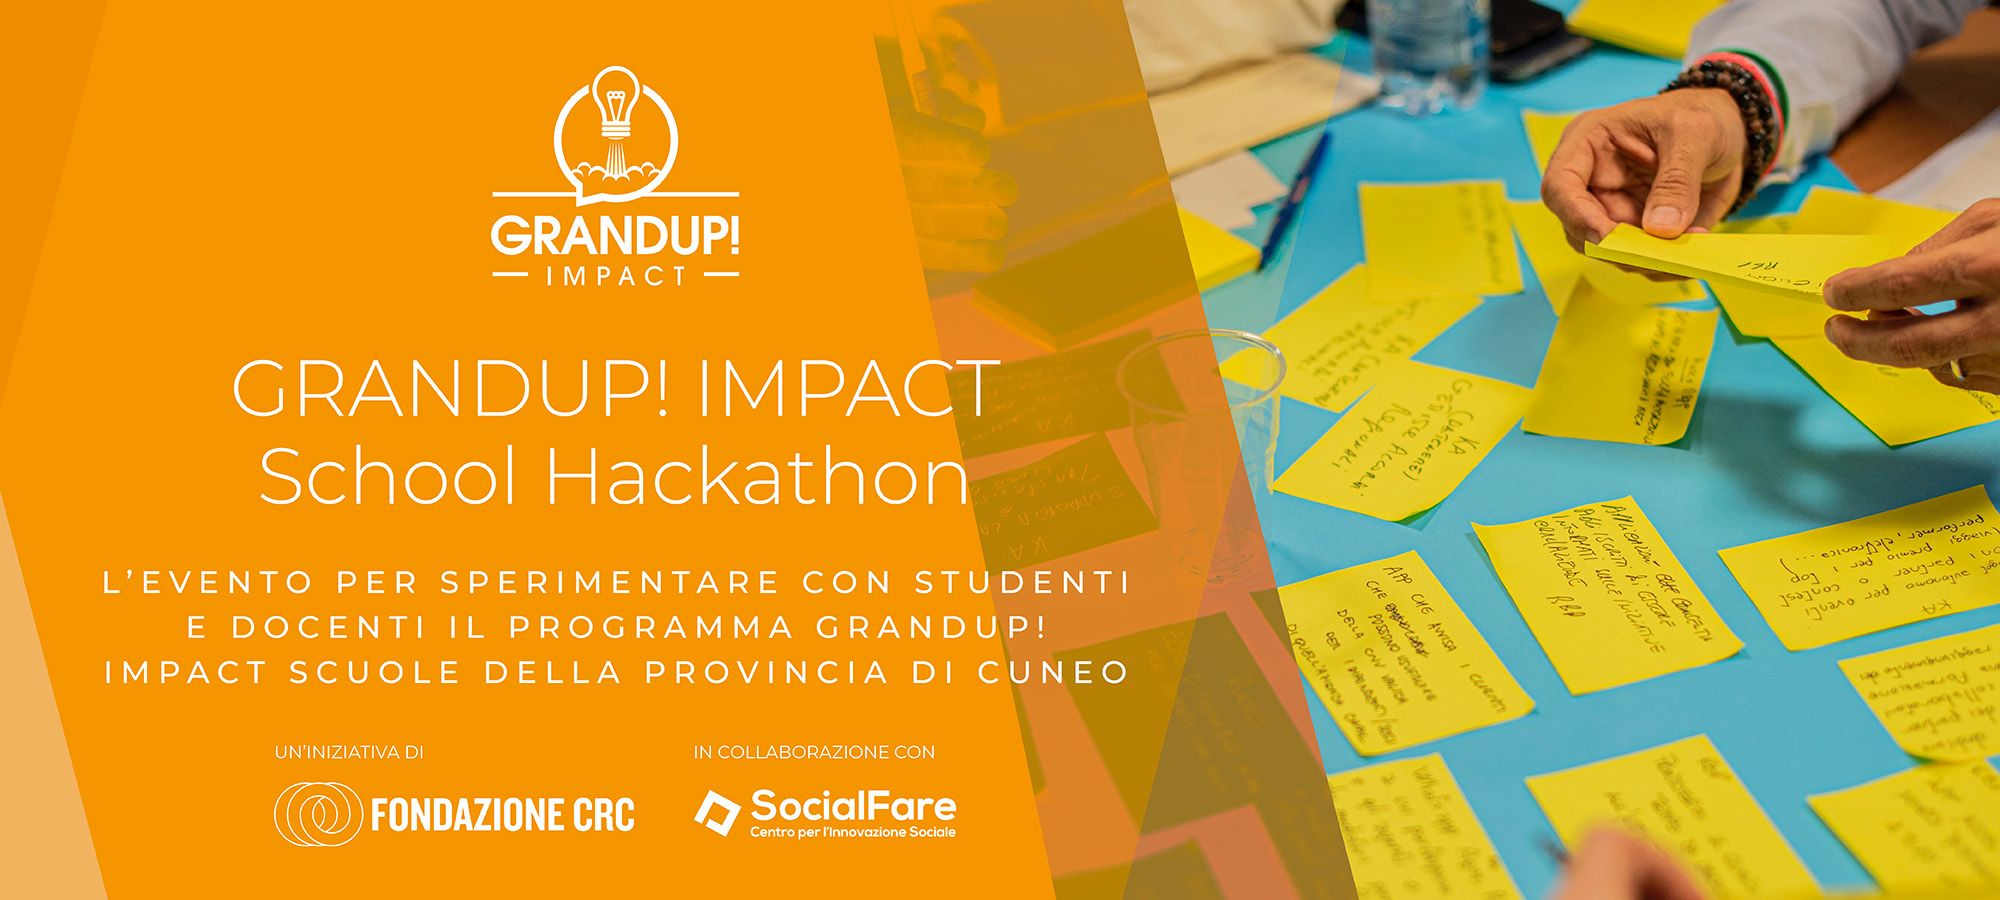 GrandUP! IMPACT – School Hackathon